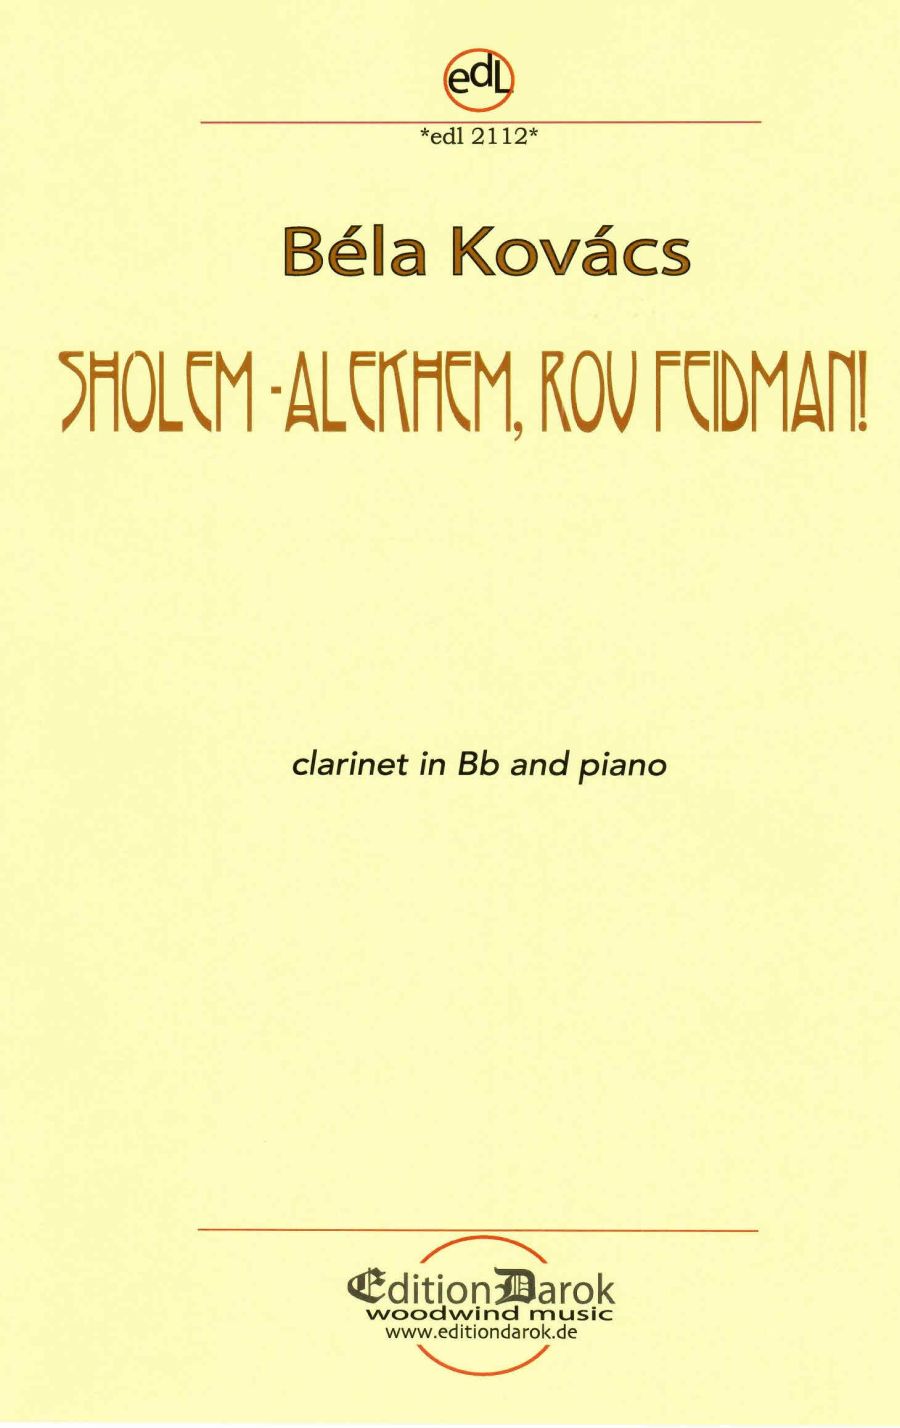 Sholem - alechem, rov Feidman! para clarinete. Bela Kovacs